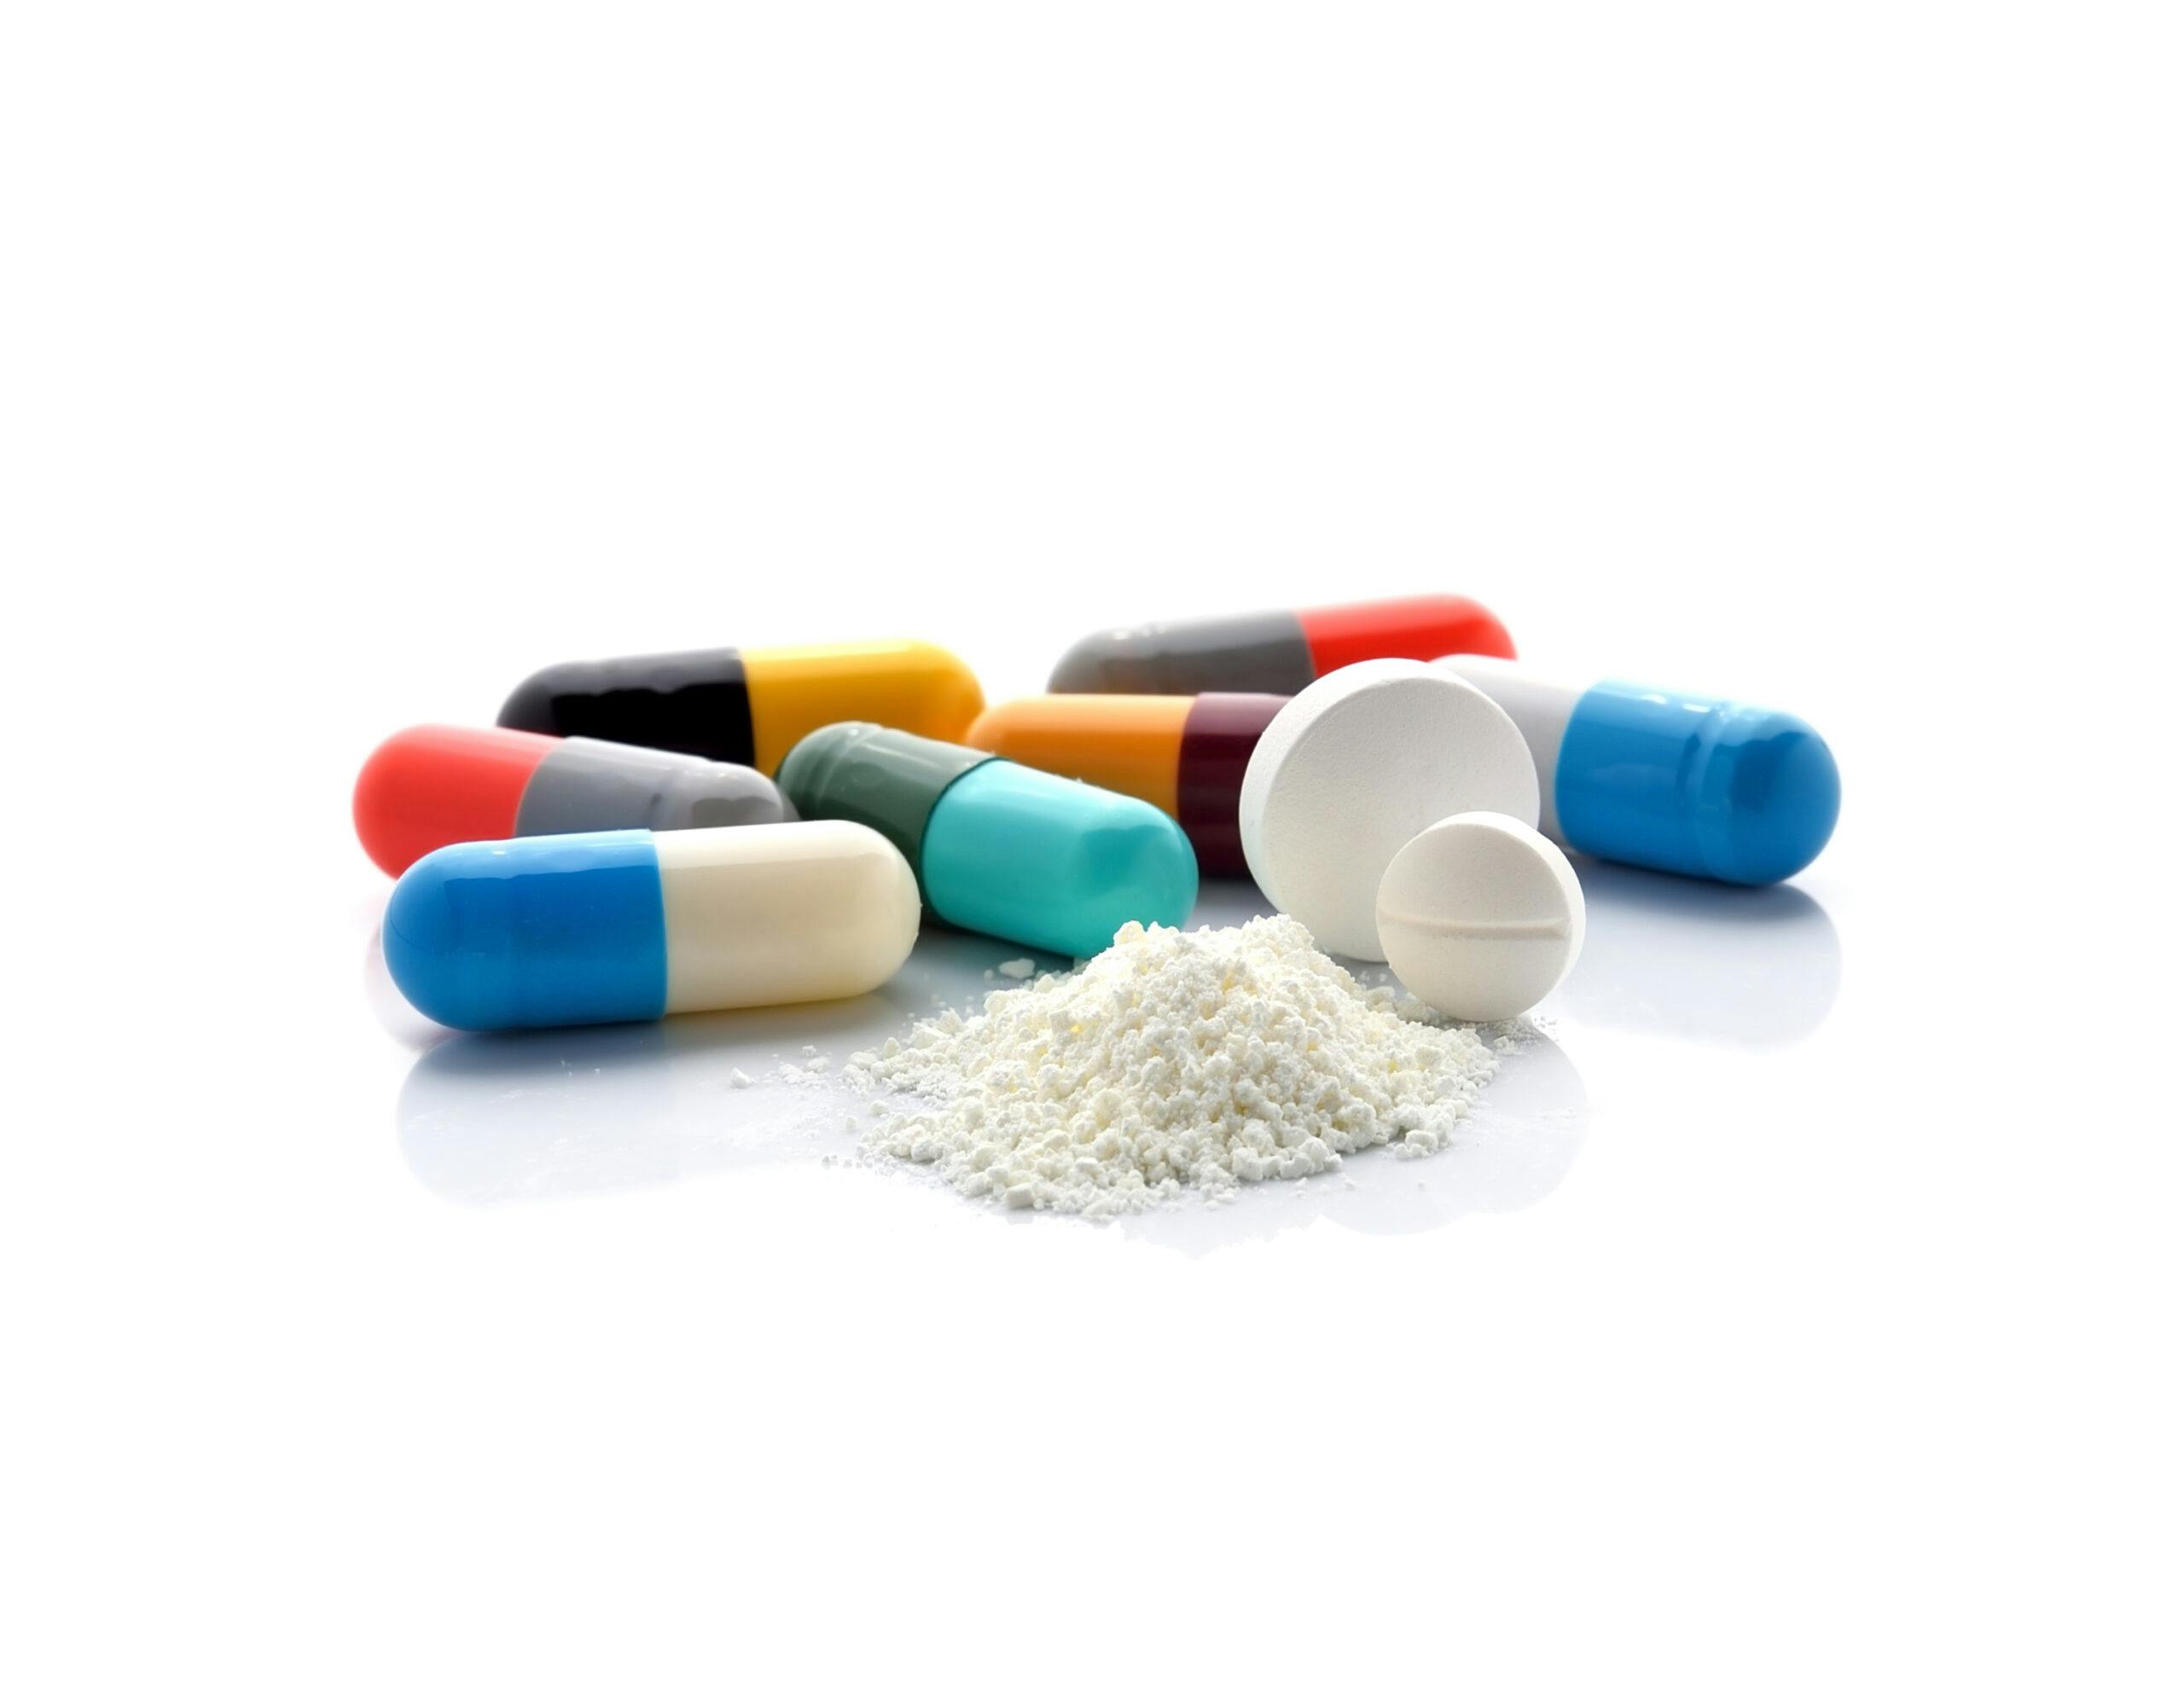 capsule pills and white powder amphetamines